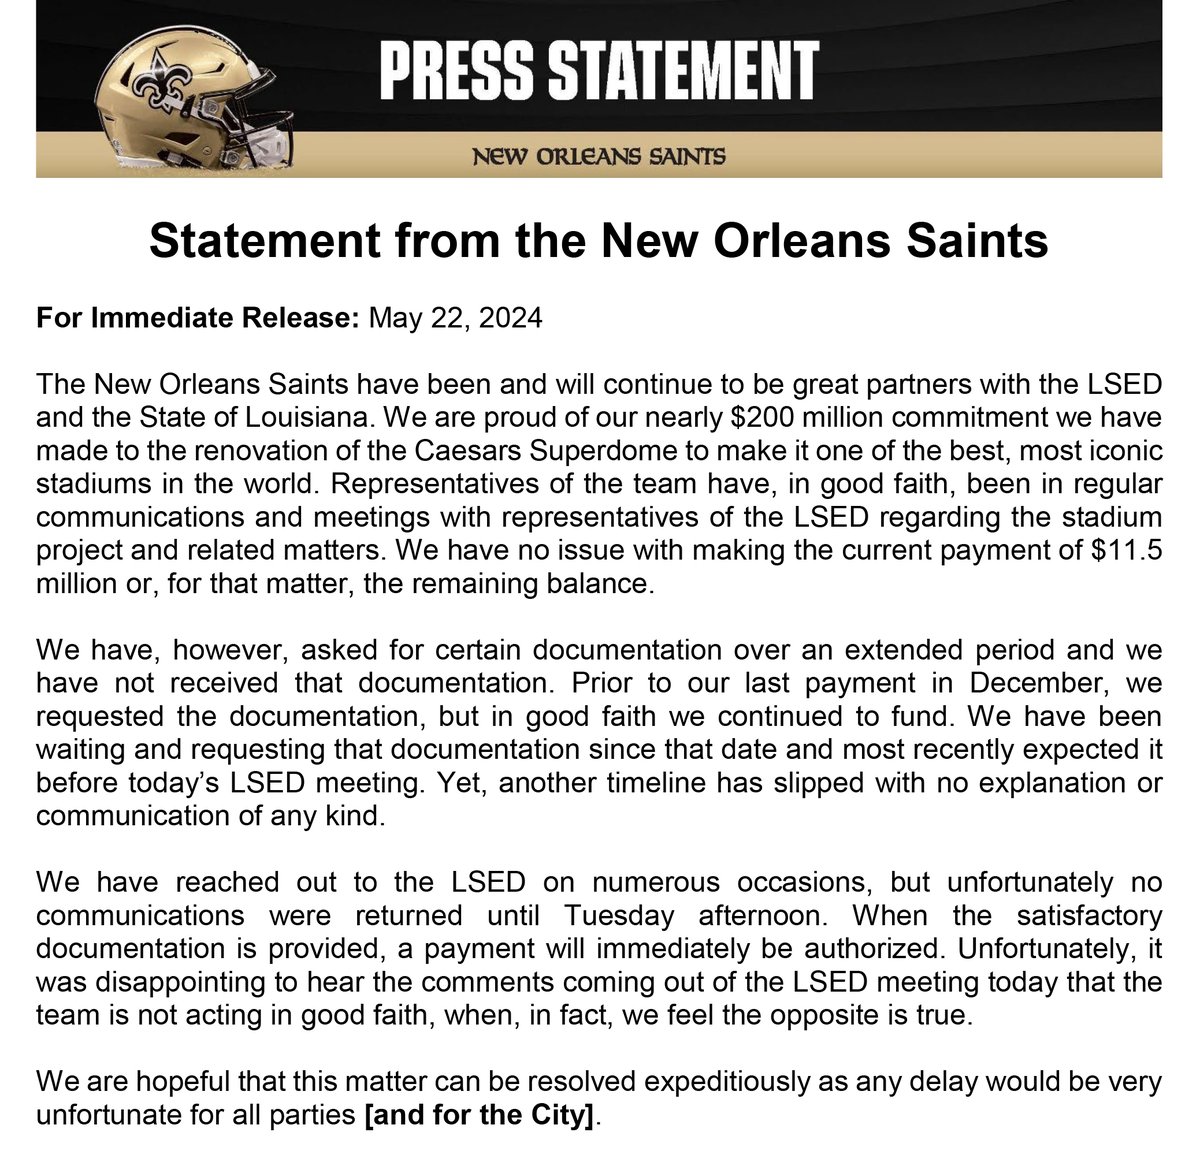 New Orleans Saints (@Saints) on Twitter photo 2024-05-22 21:21:31